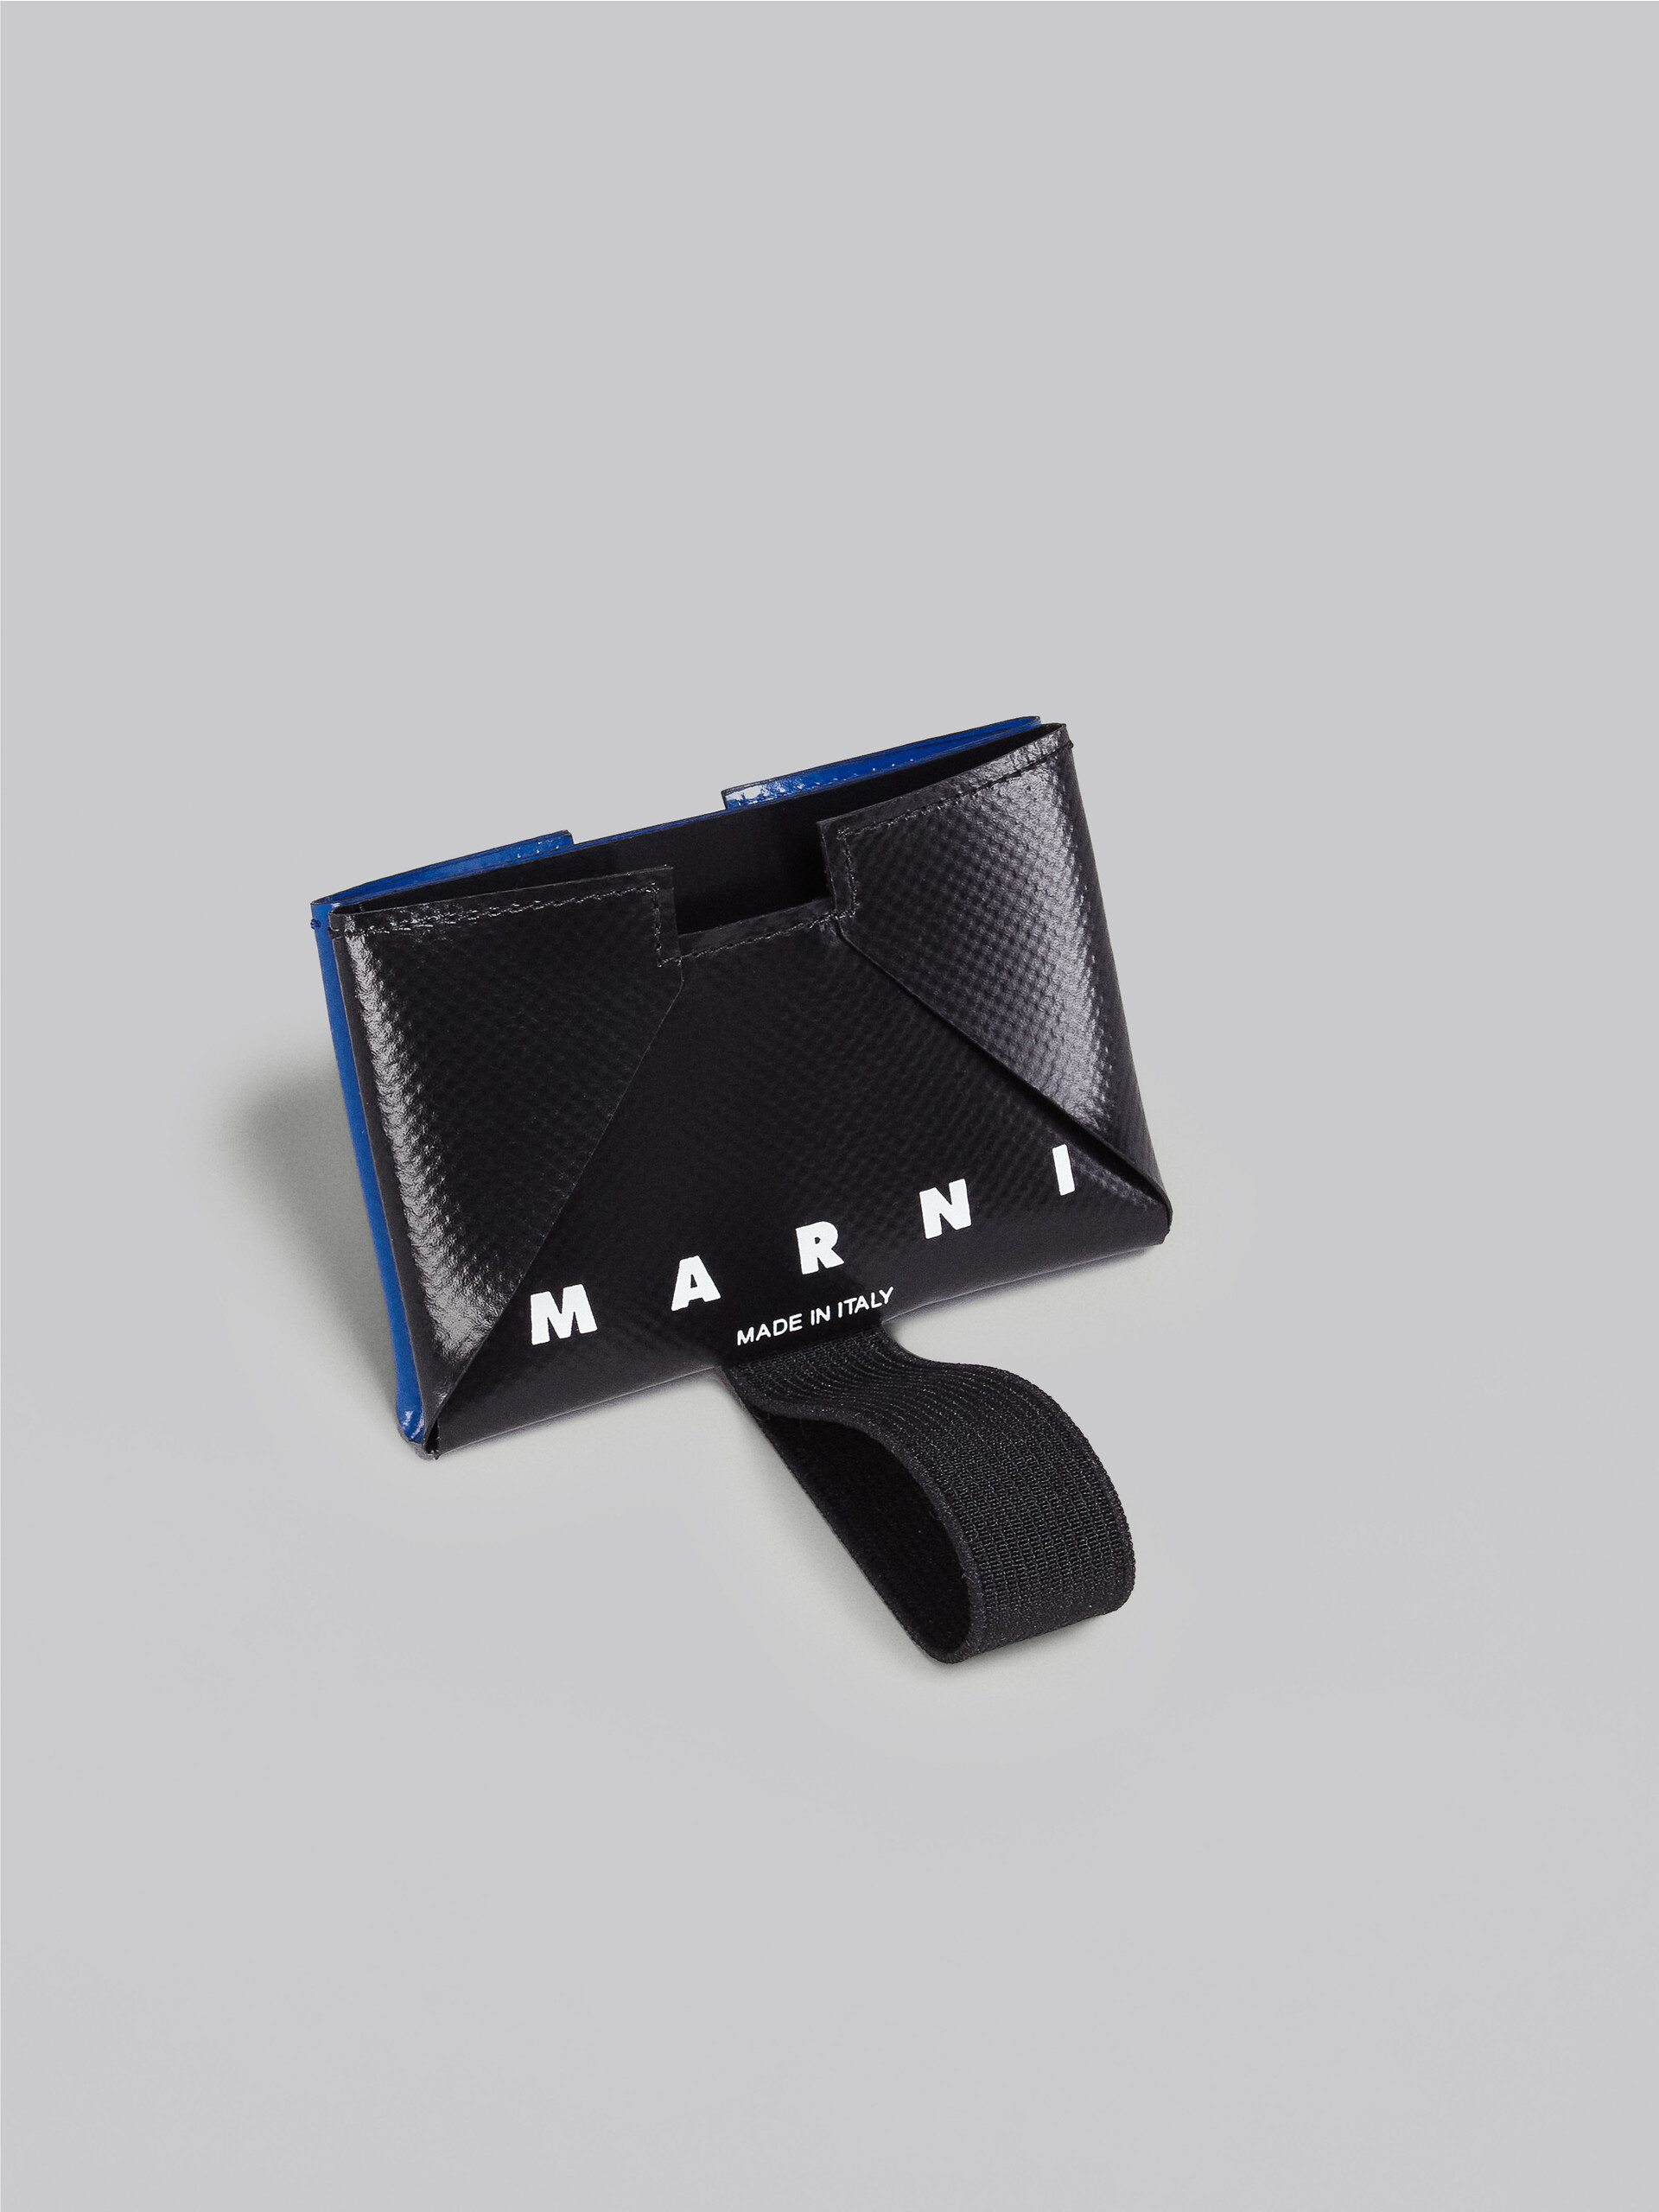 Black and blue PVC credit card case - Wallets - Image 5